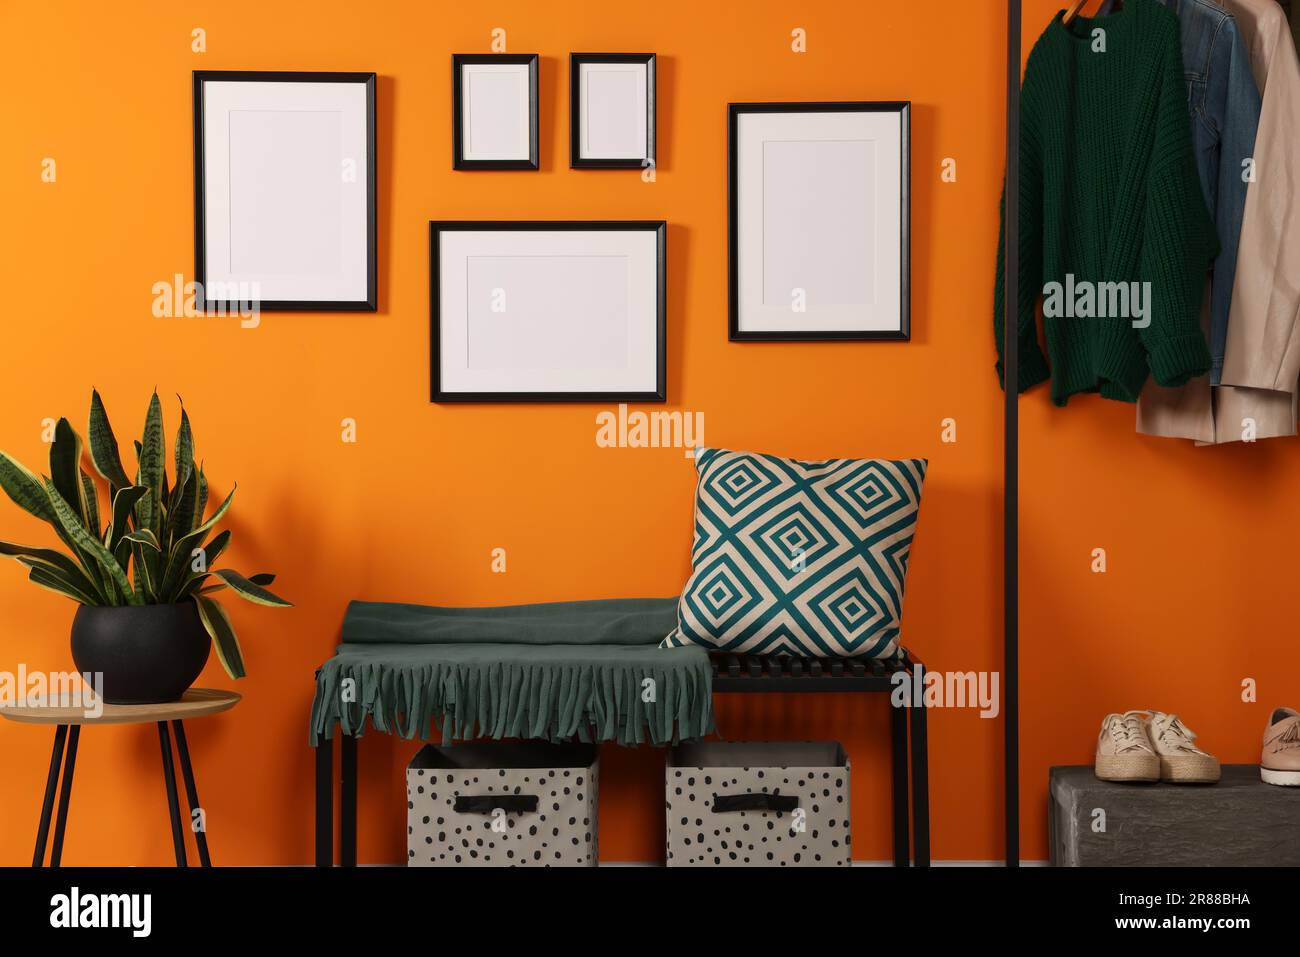 Empty frames hanging on orange wall in stylish room. Mockup for design ...